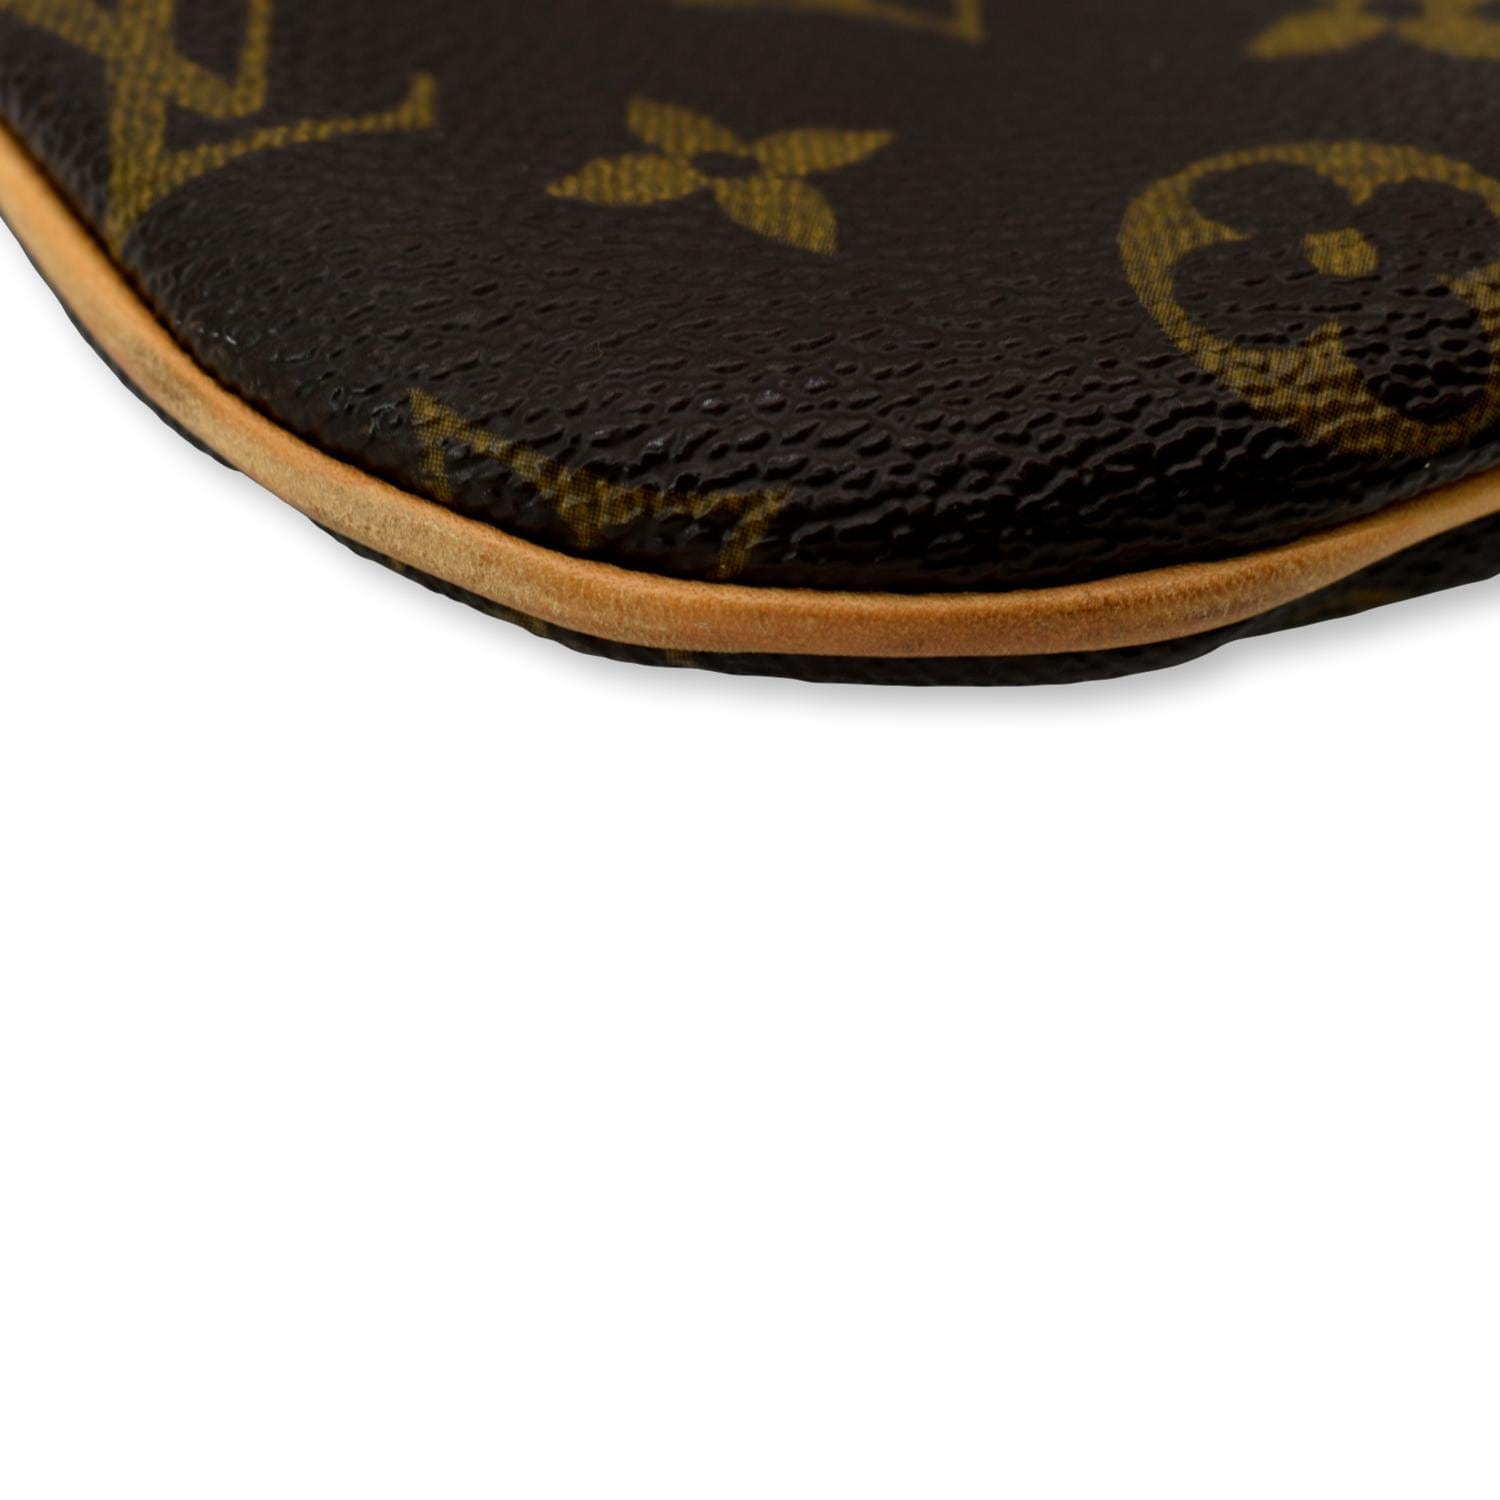 Louis Vuitton Pochette Bosphore Monogram 5lva82 Brown Coated